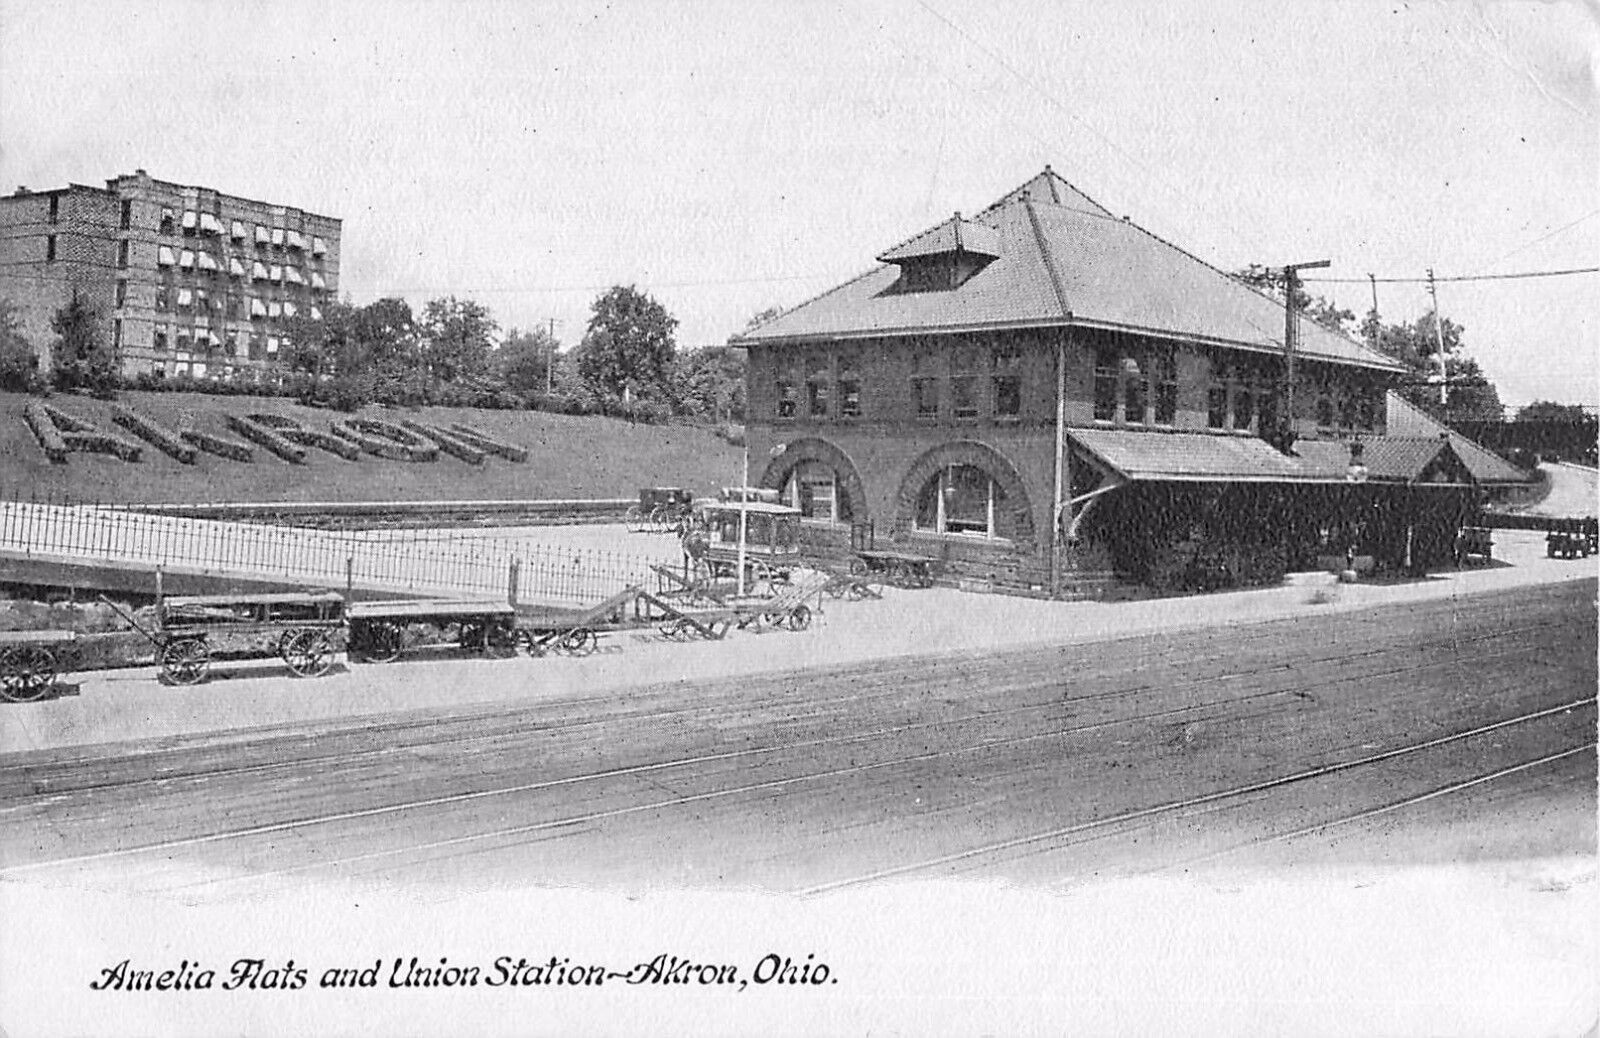 c1910 Amelia Flats and Union Station Railroad Depot, Akron, Ohio Postcard